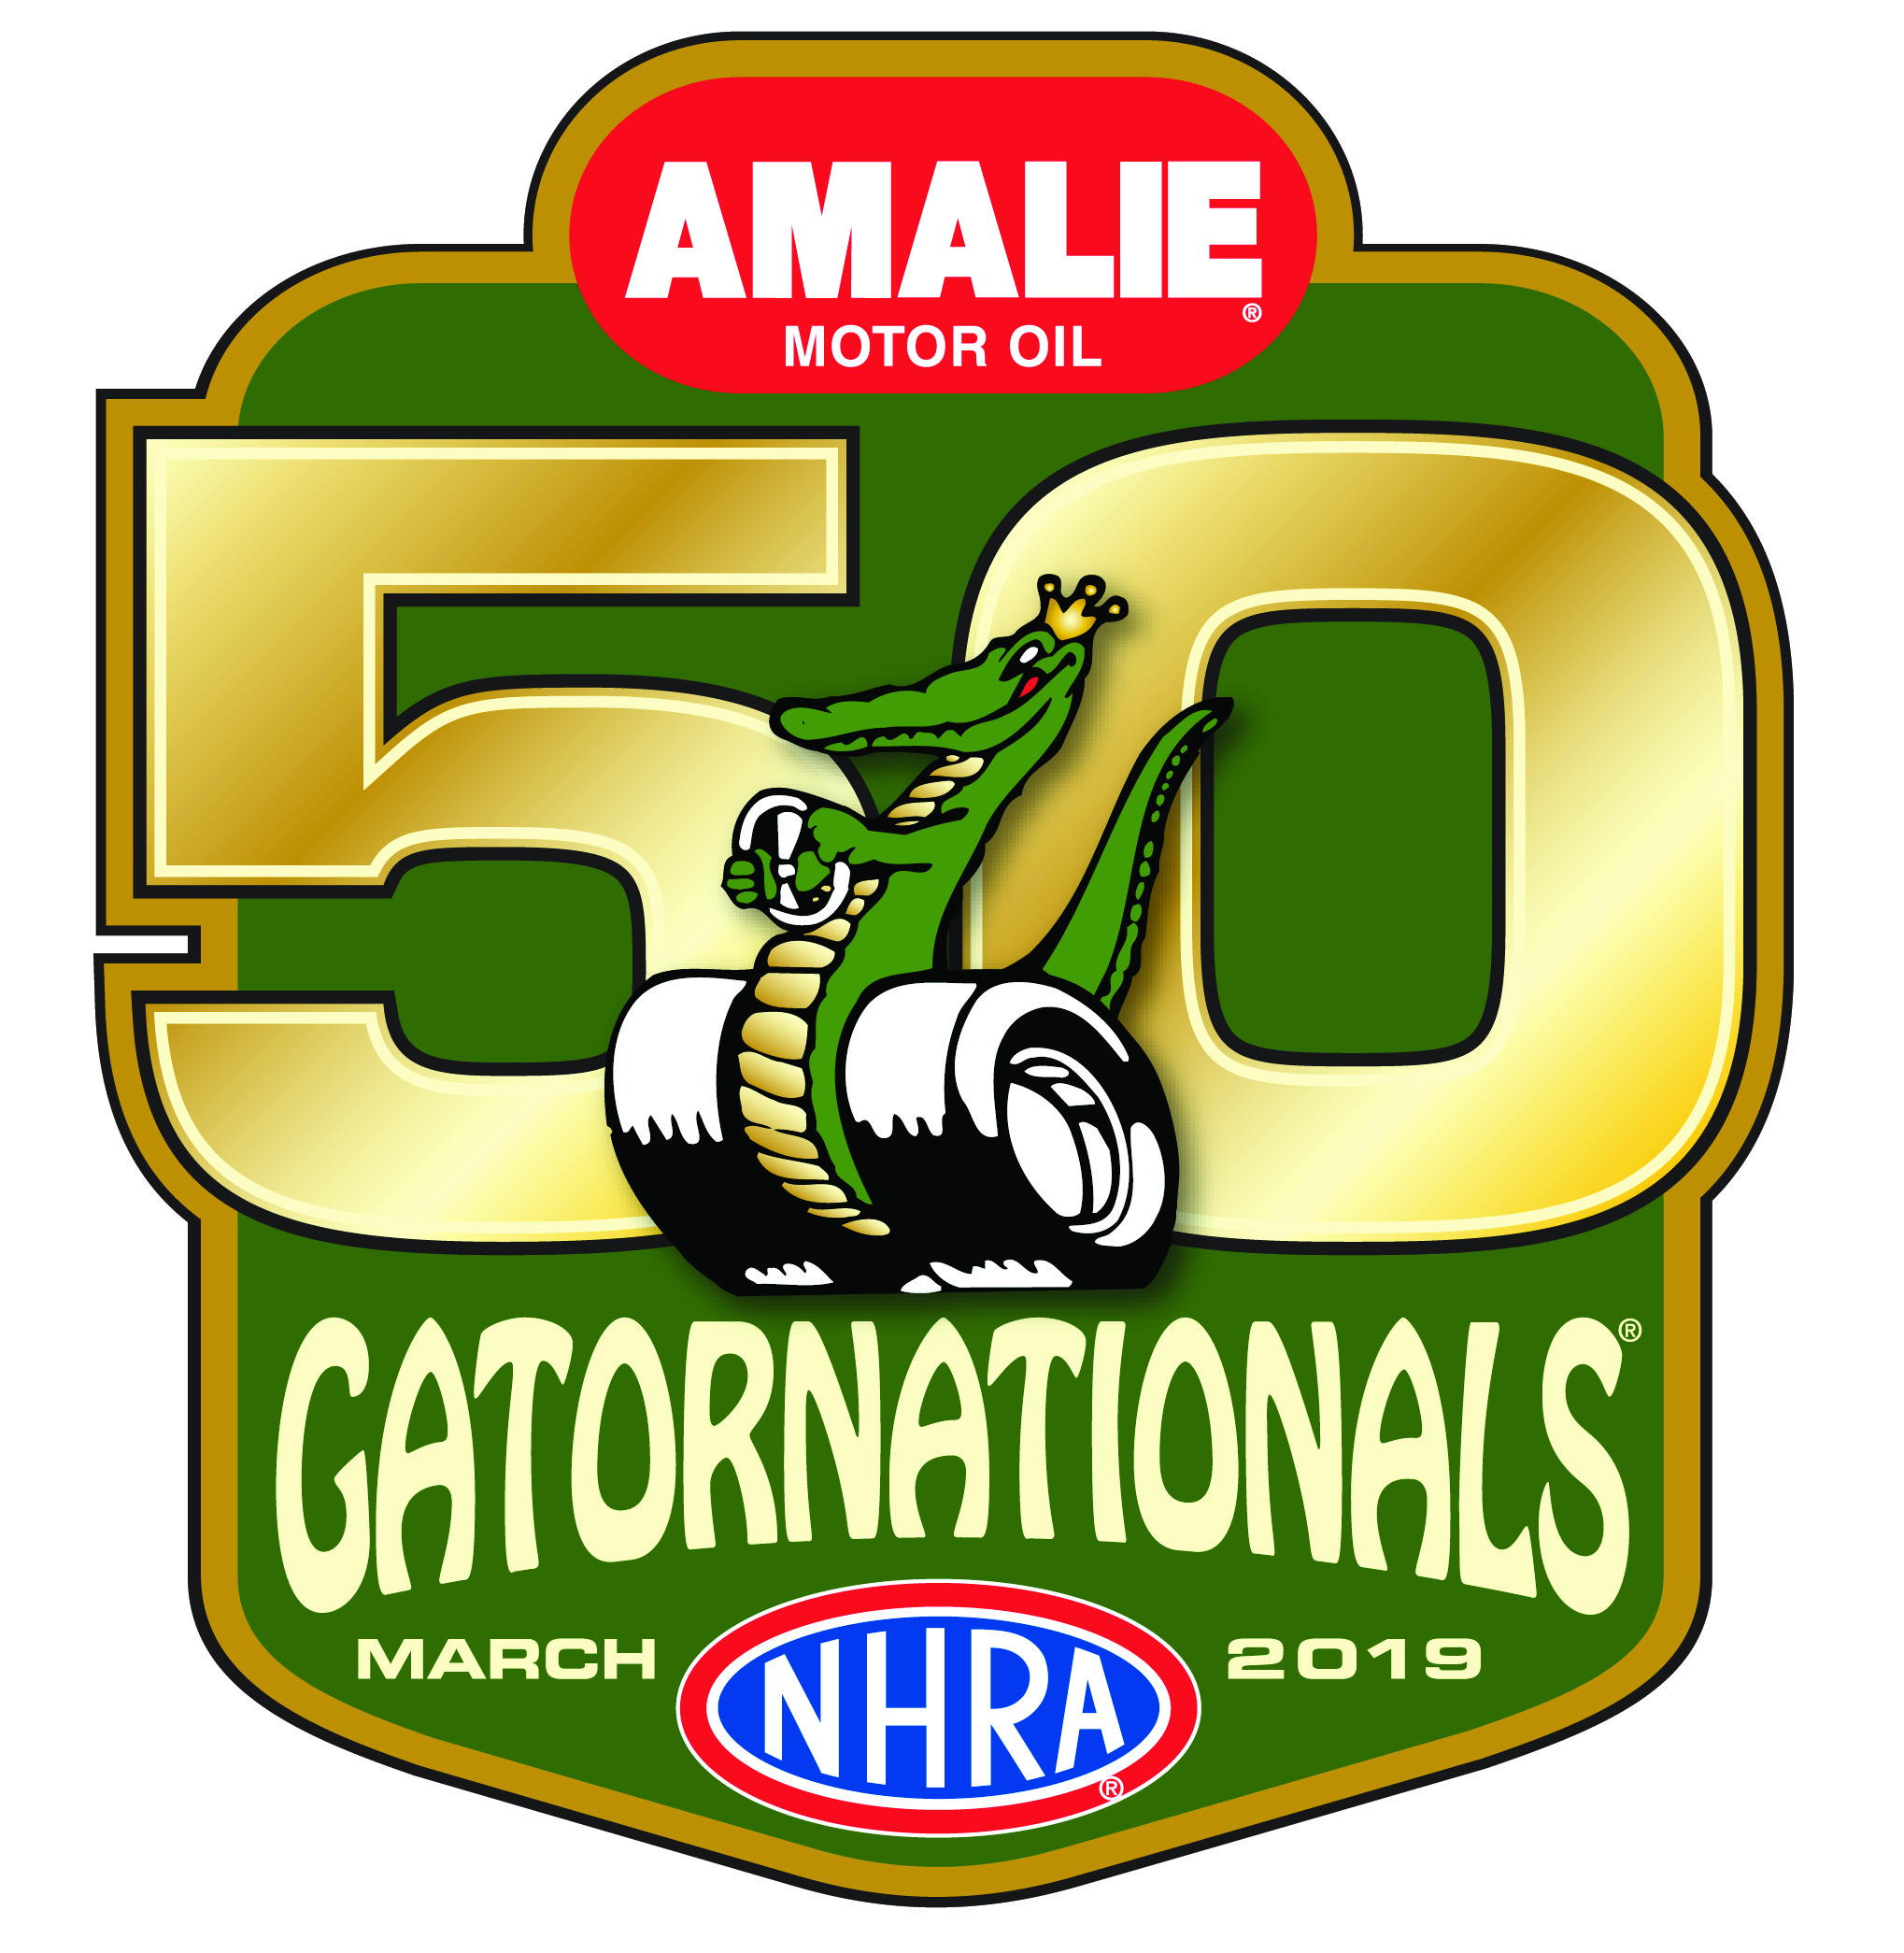 NHRA 50th Gatornationals logo